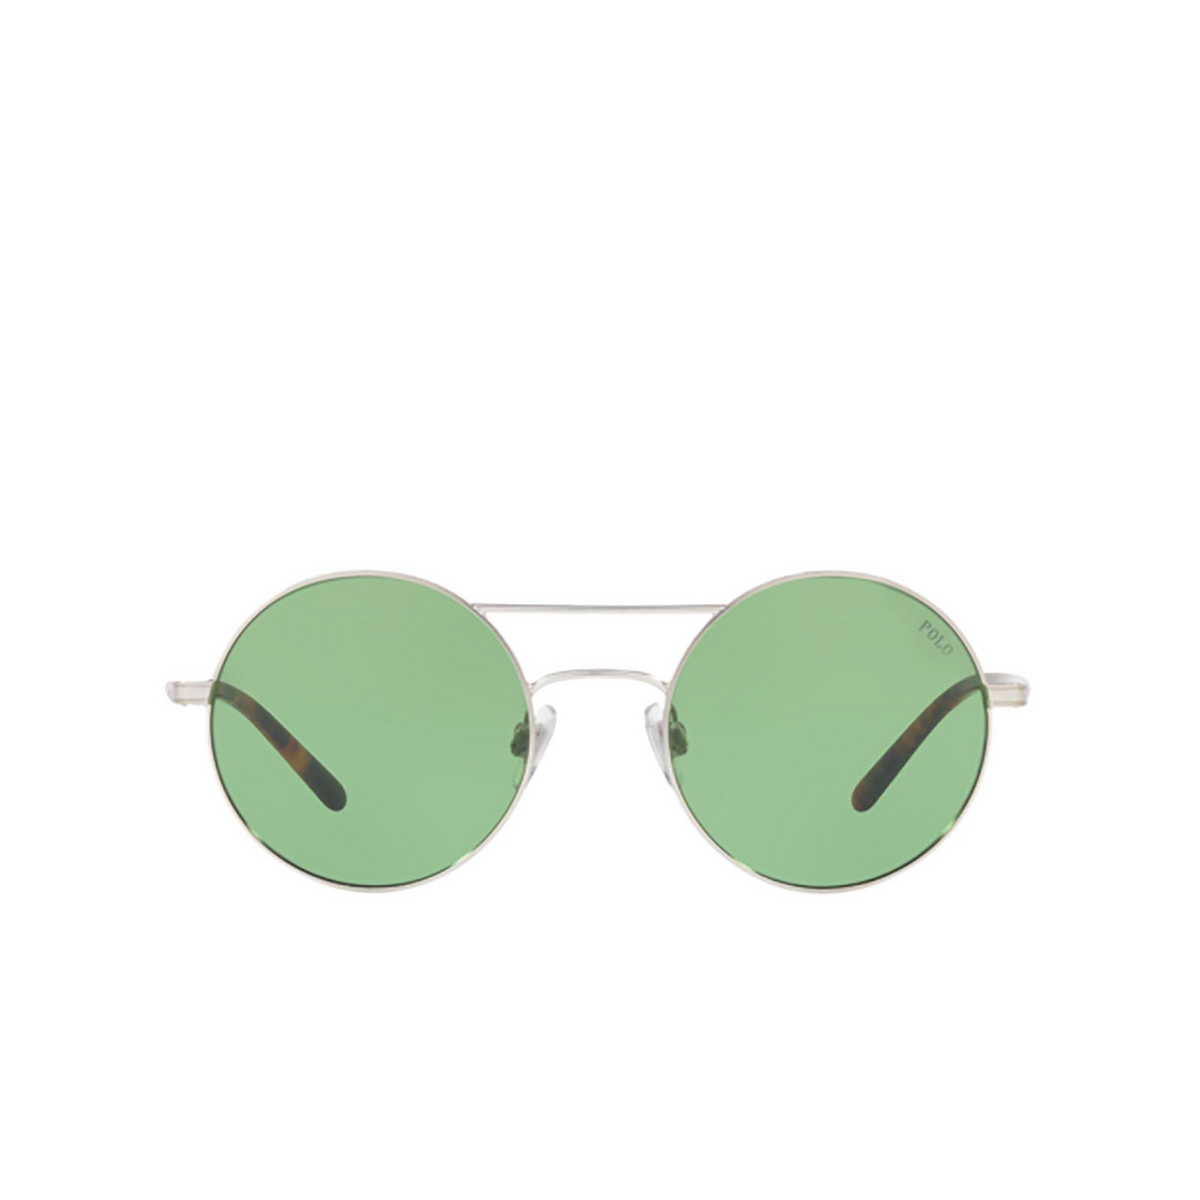 Polo Ralph Lauren® Round Sunglasses: PH3108 color 9326/71 - front view.